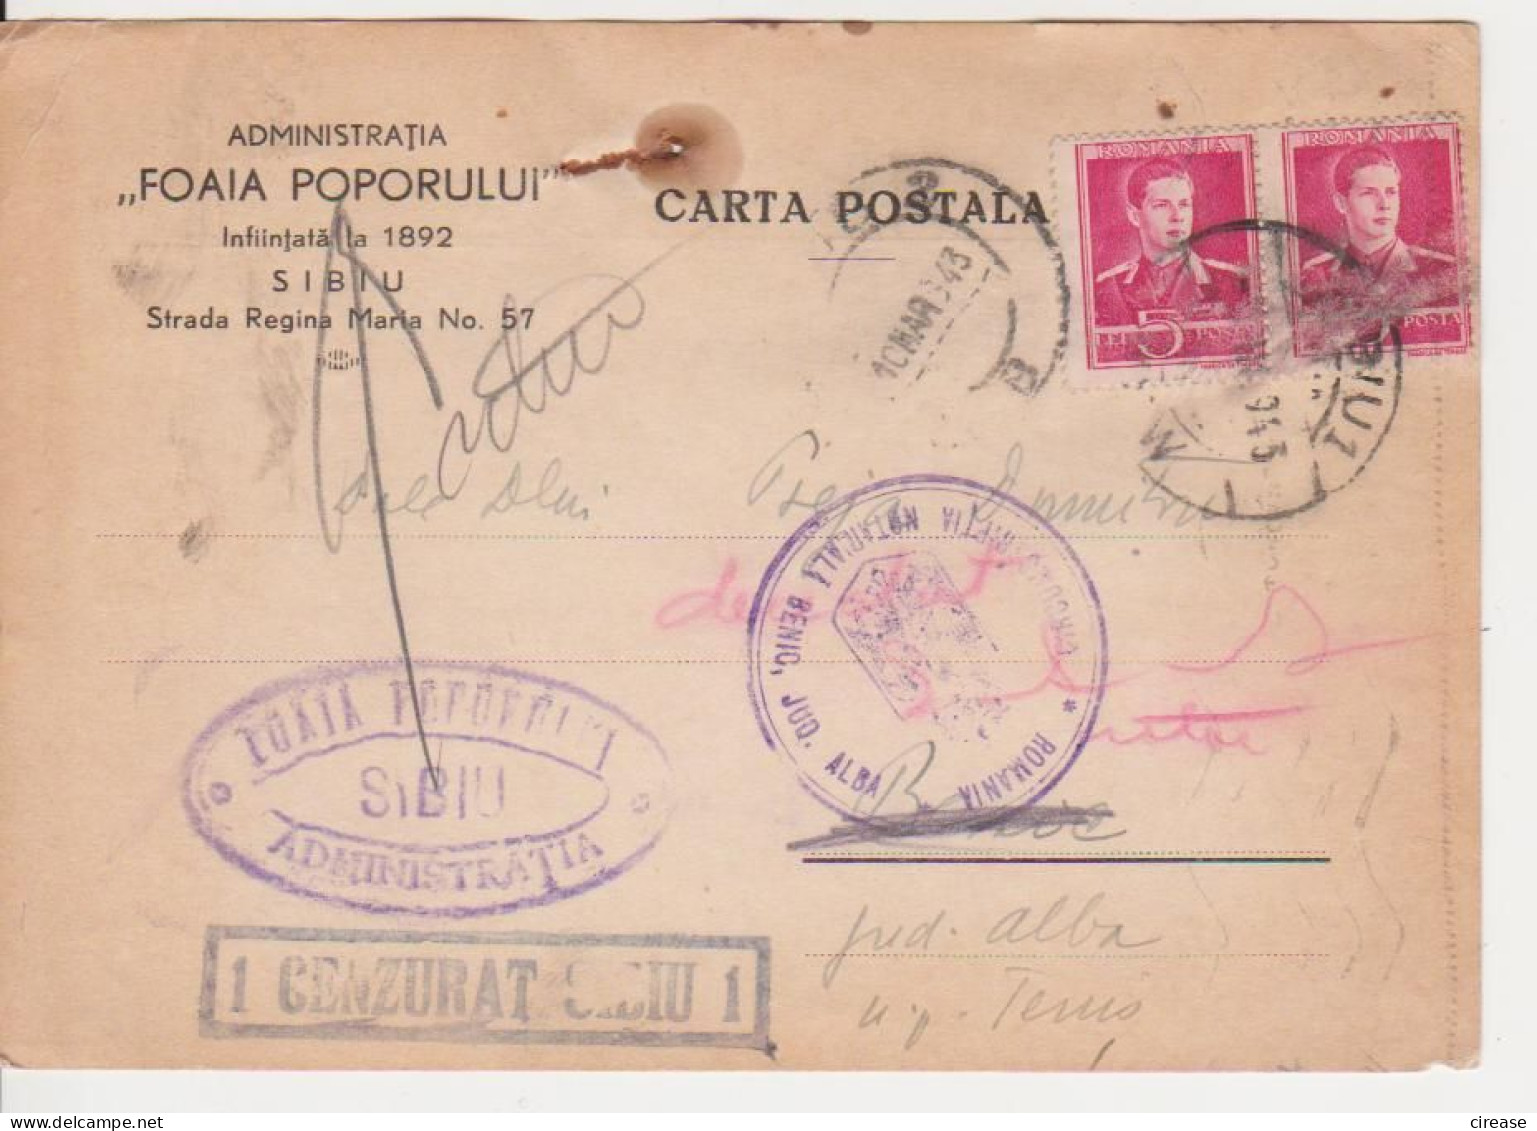 WW2 POSTCARD 1943 Censorship, King Mihai ROMANIA - World War 2 Letters